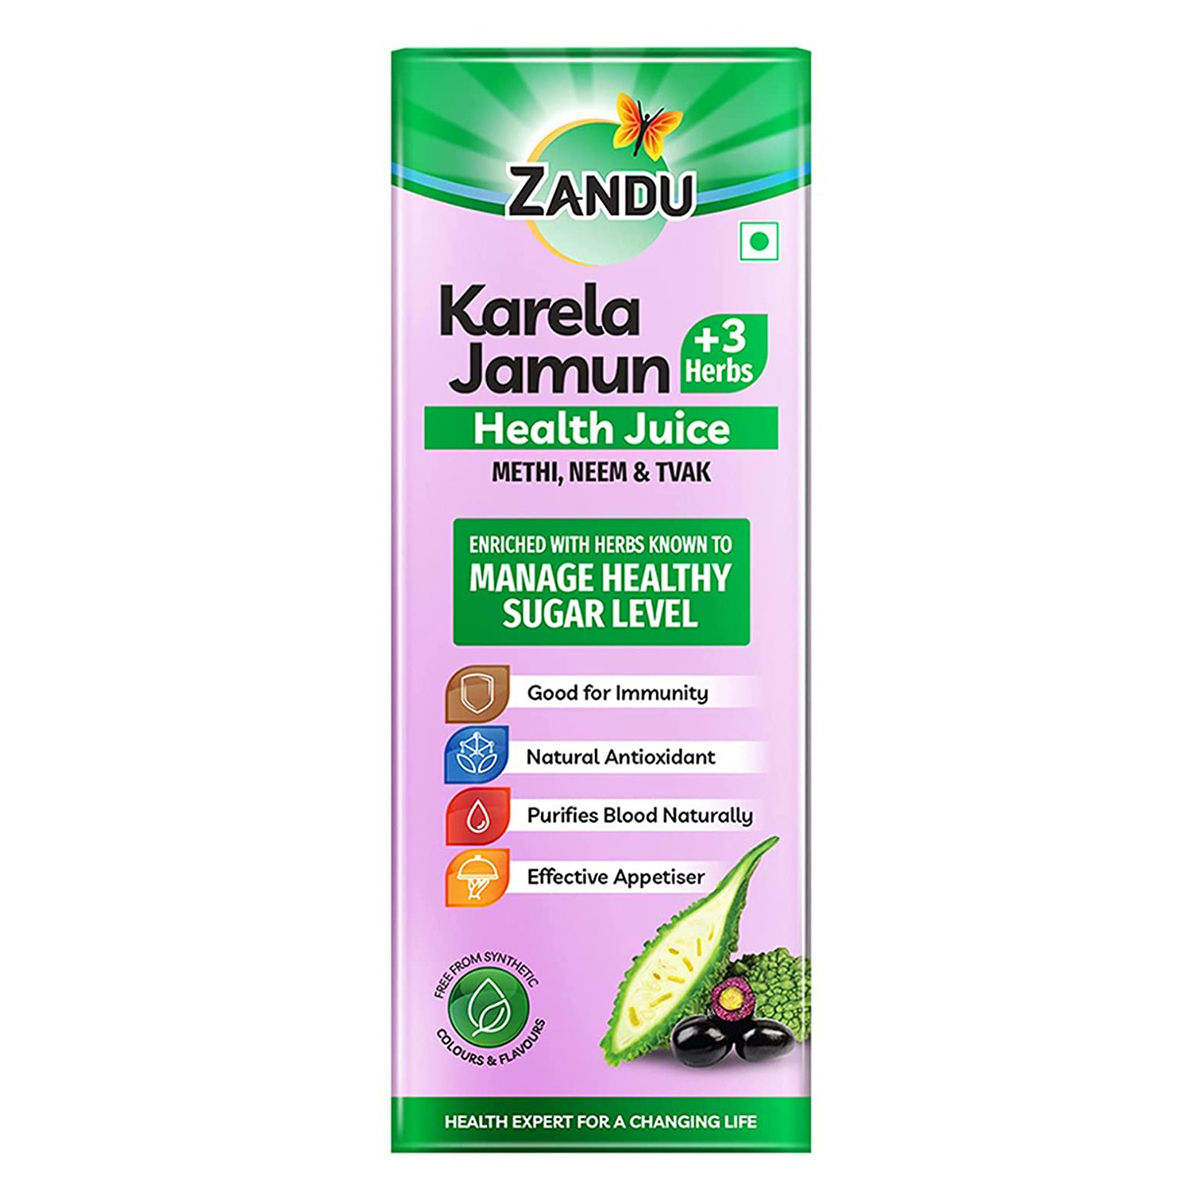 Buy Zandu Karela Jamun +3 Herbs Health Juice, 1 Litre Online